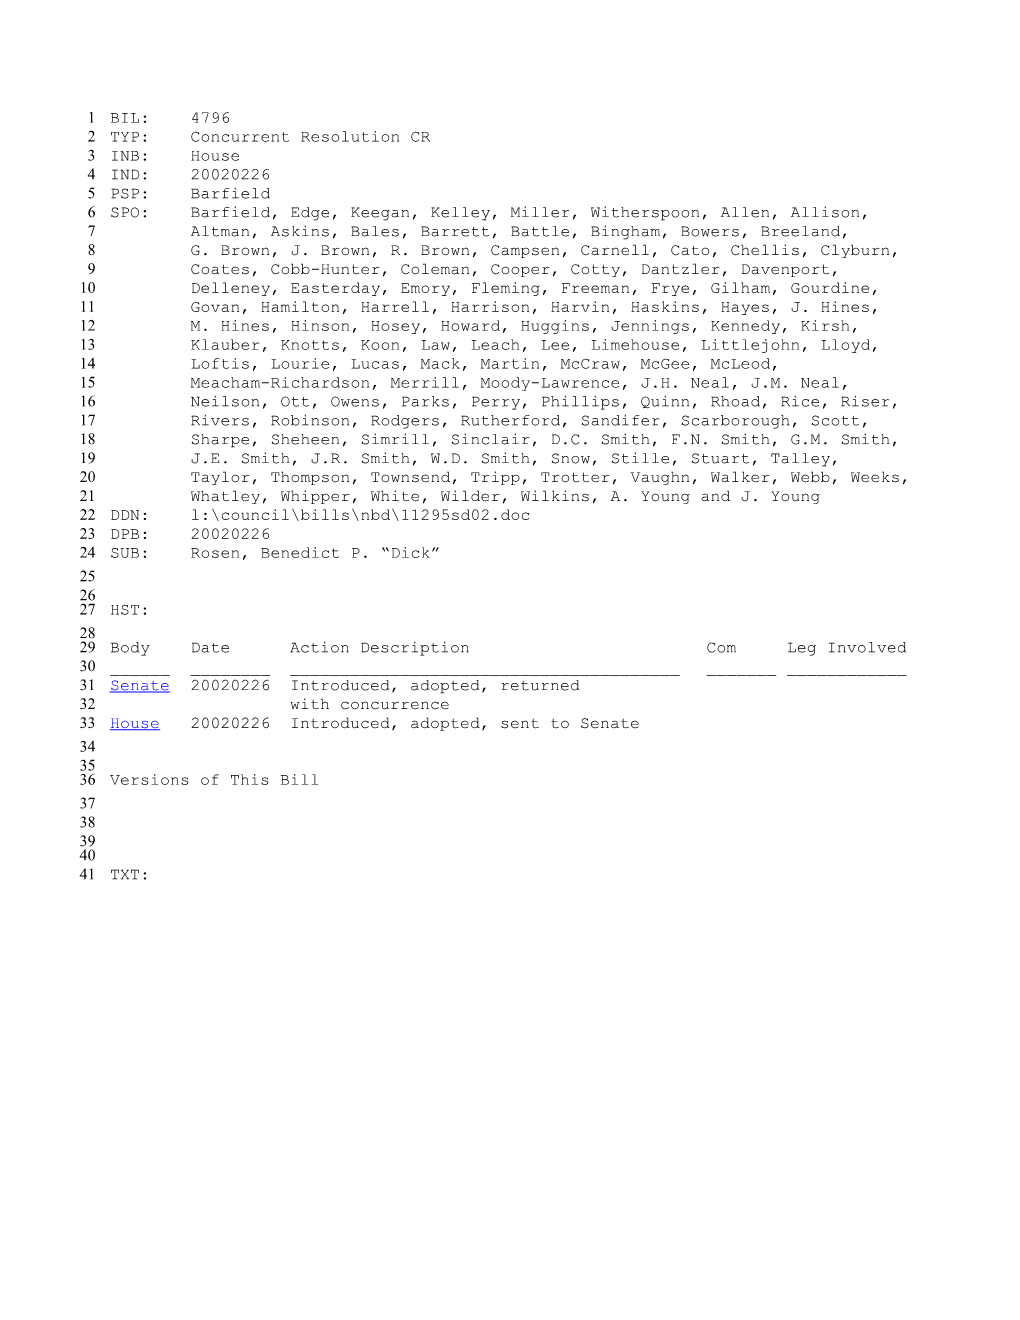 2001-2002 Bill 4796: Rosen, Benedict P. Dick - South Carolina Legislature Online